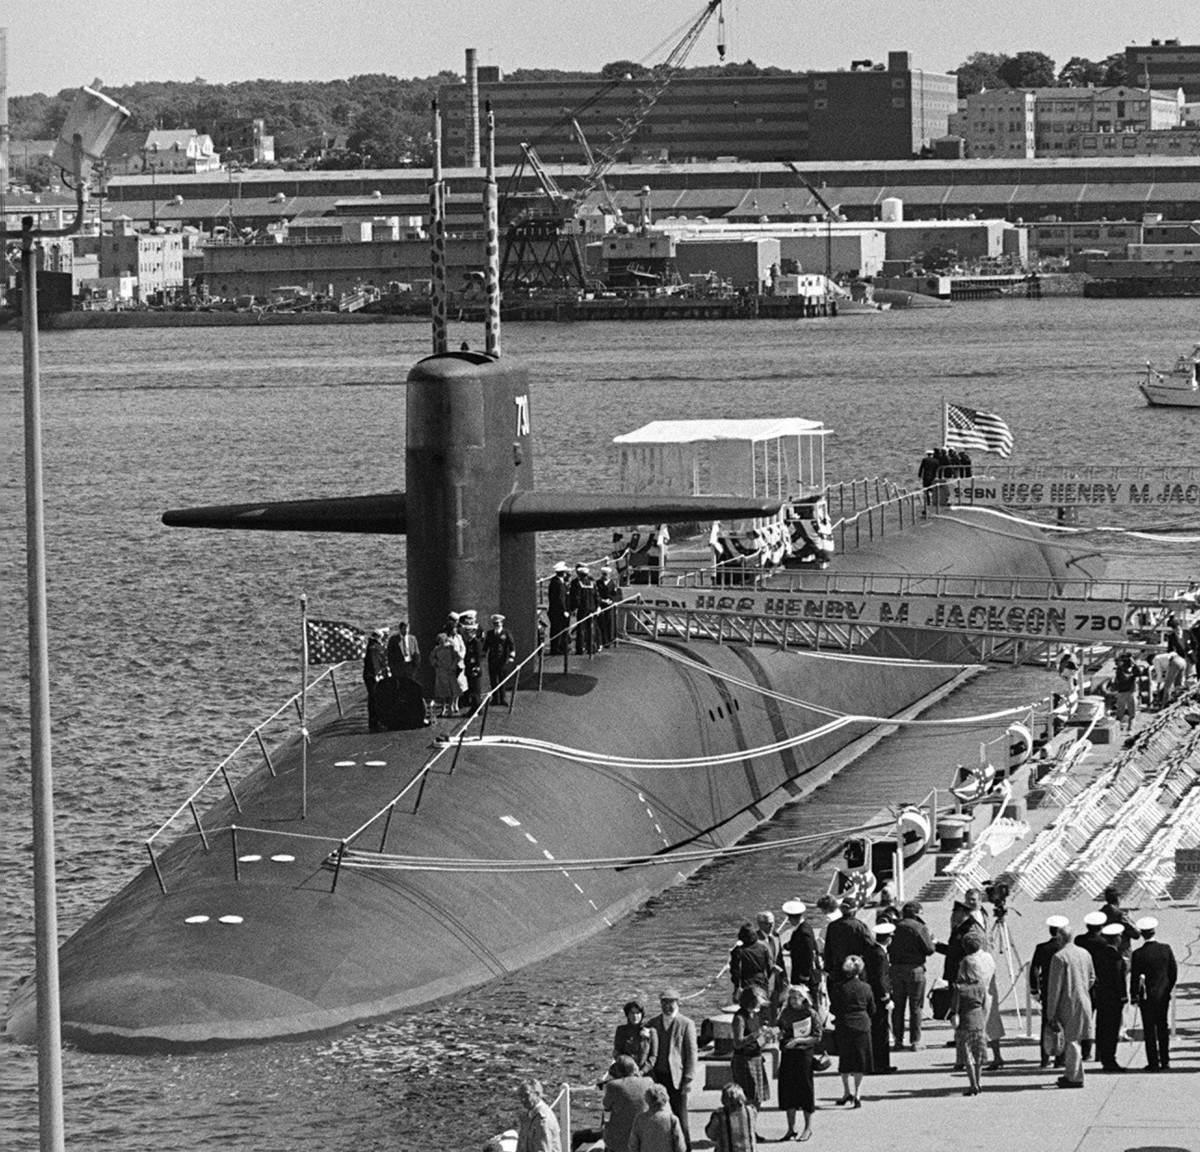 ssbn-730 uss henry m. jackson ohio class ballistic missile submarine 1984 34 commissioning ceremony groton connecticut